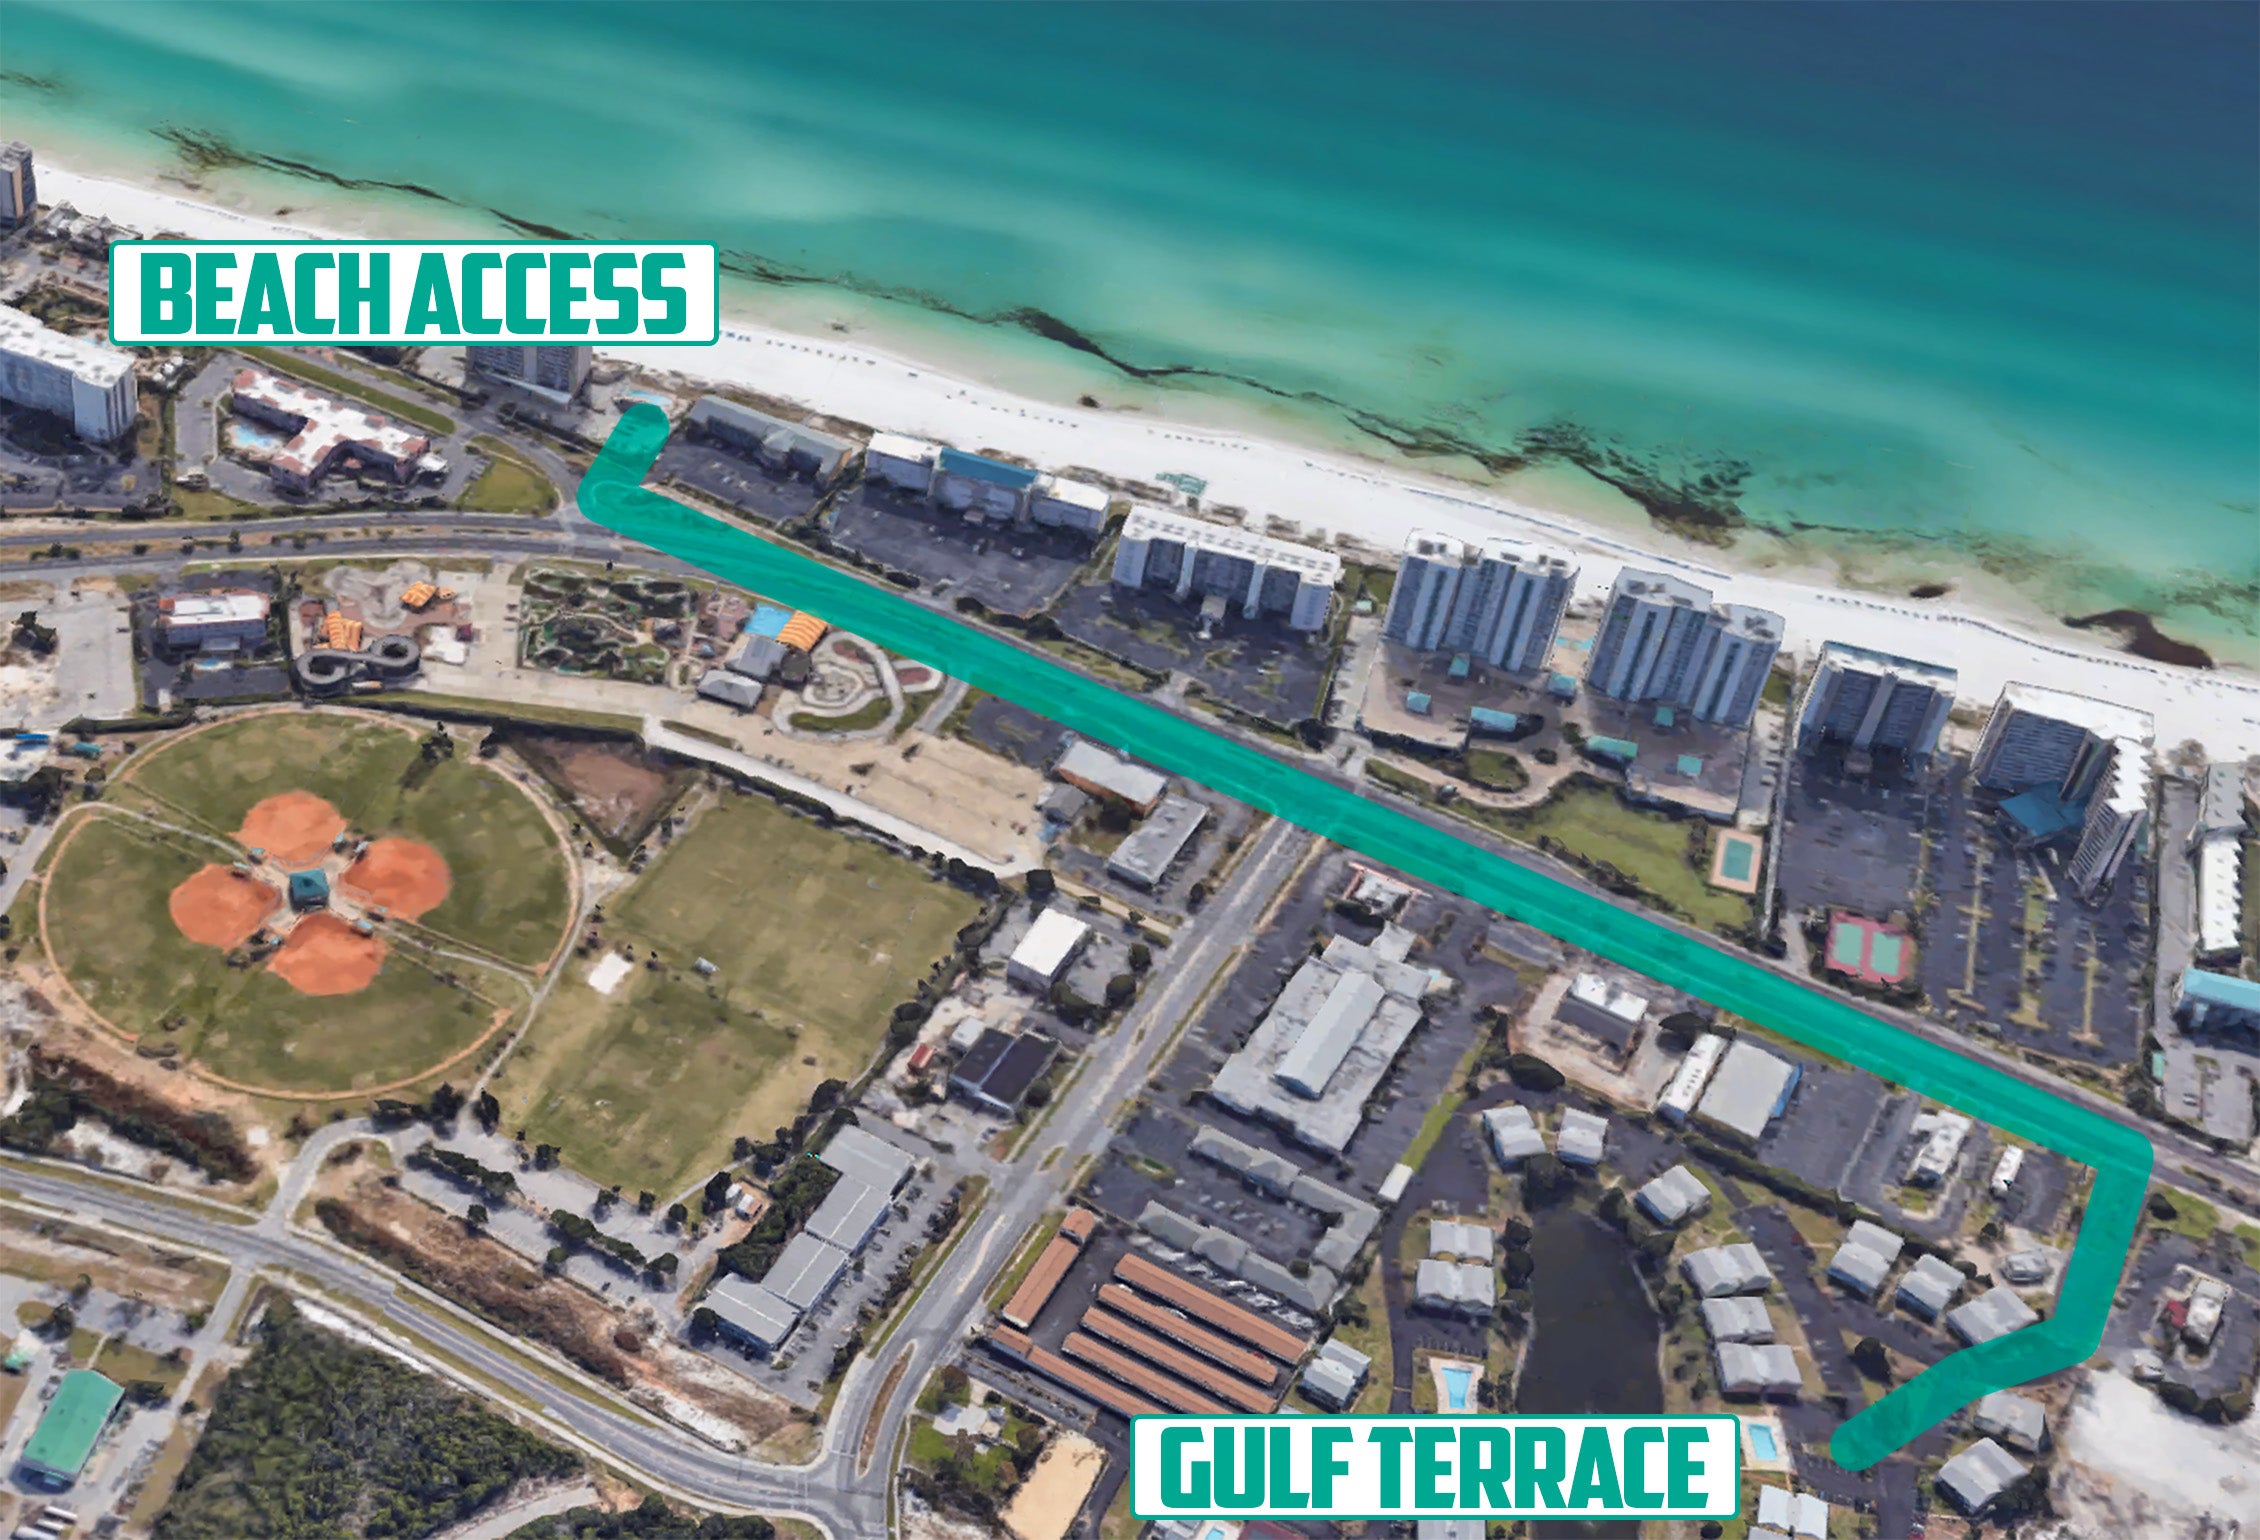 Gulf+Terrace+beach+access+map